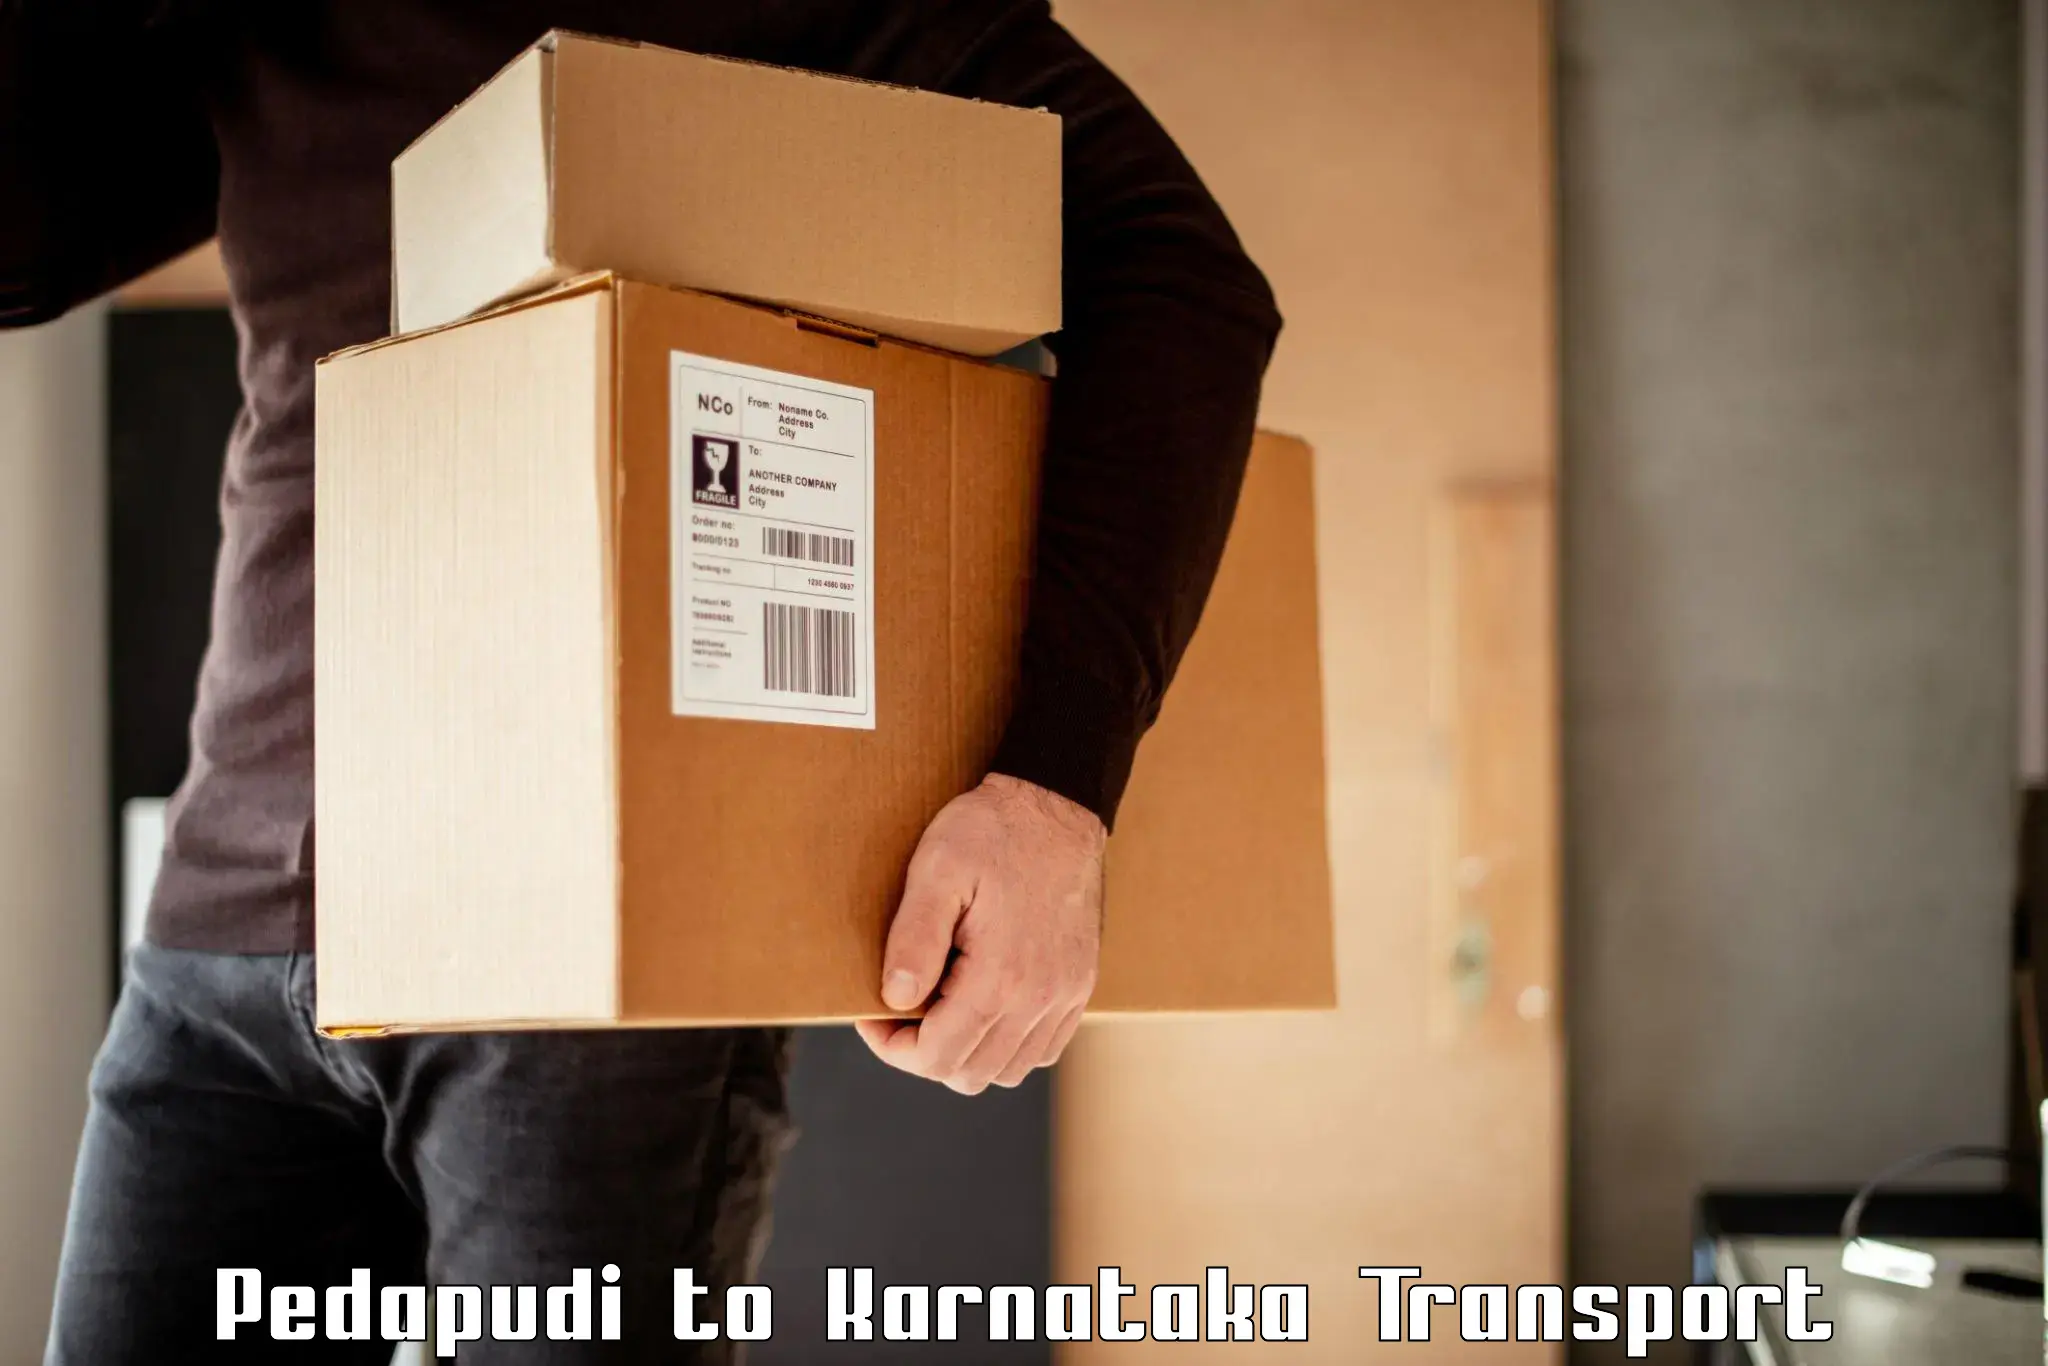 Shipping partner Pedapudi to Karnataka